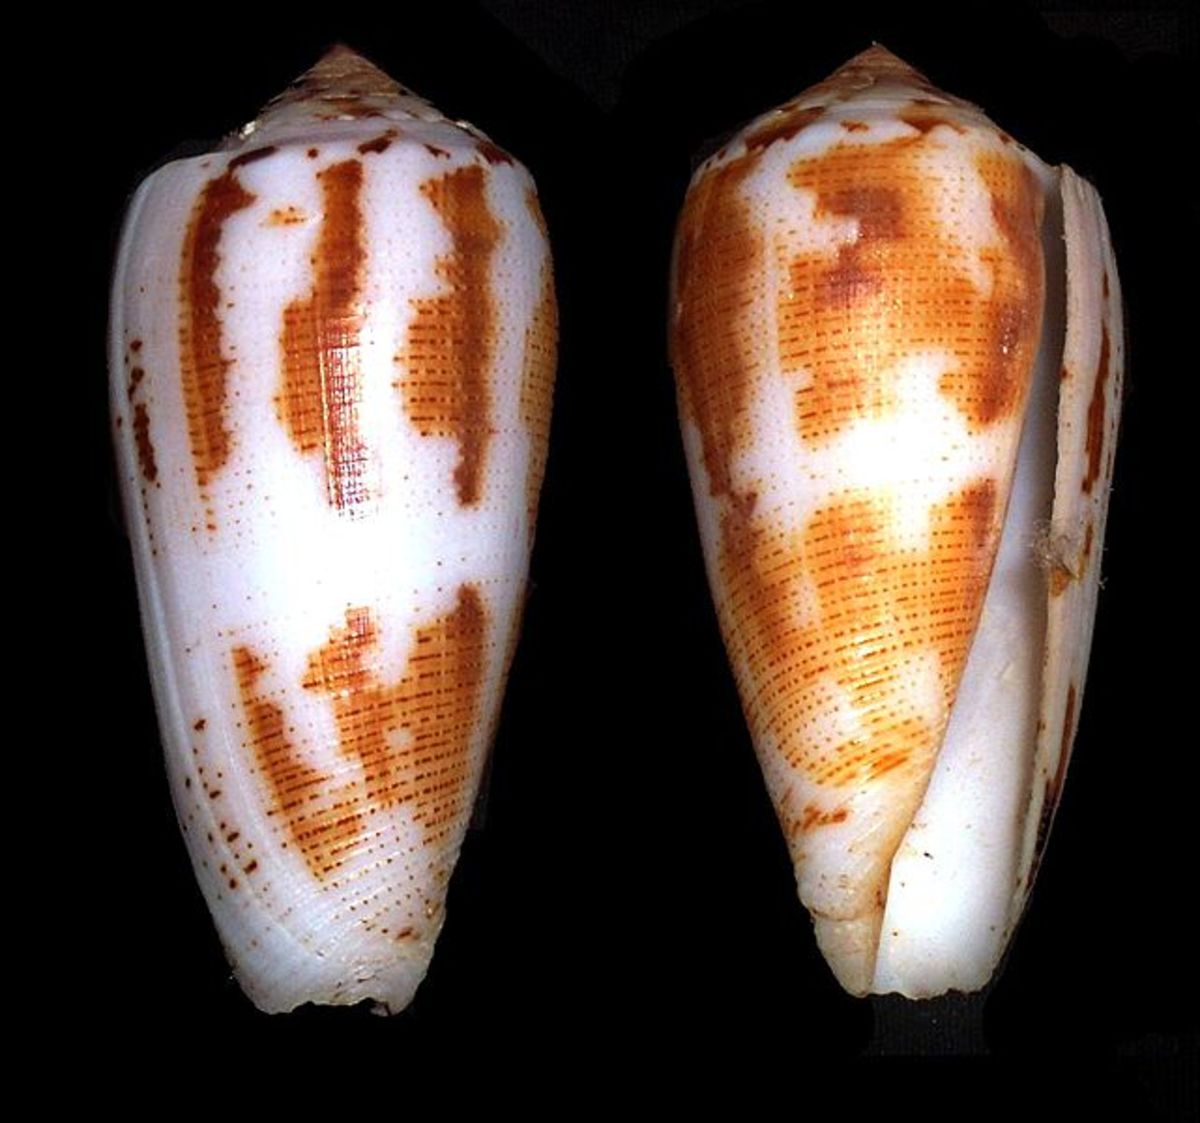 Cognus magnus aka magical cone is a species of sea snail